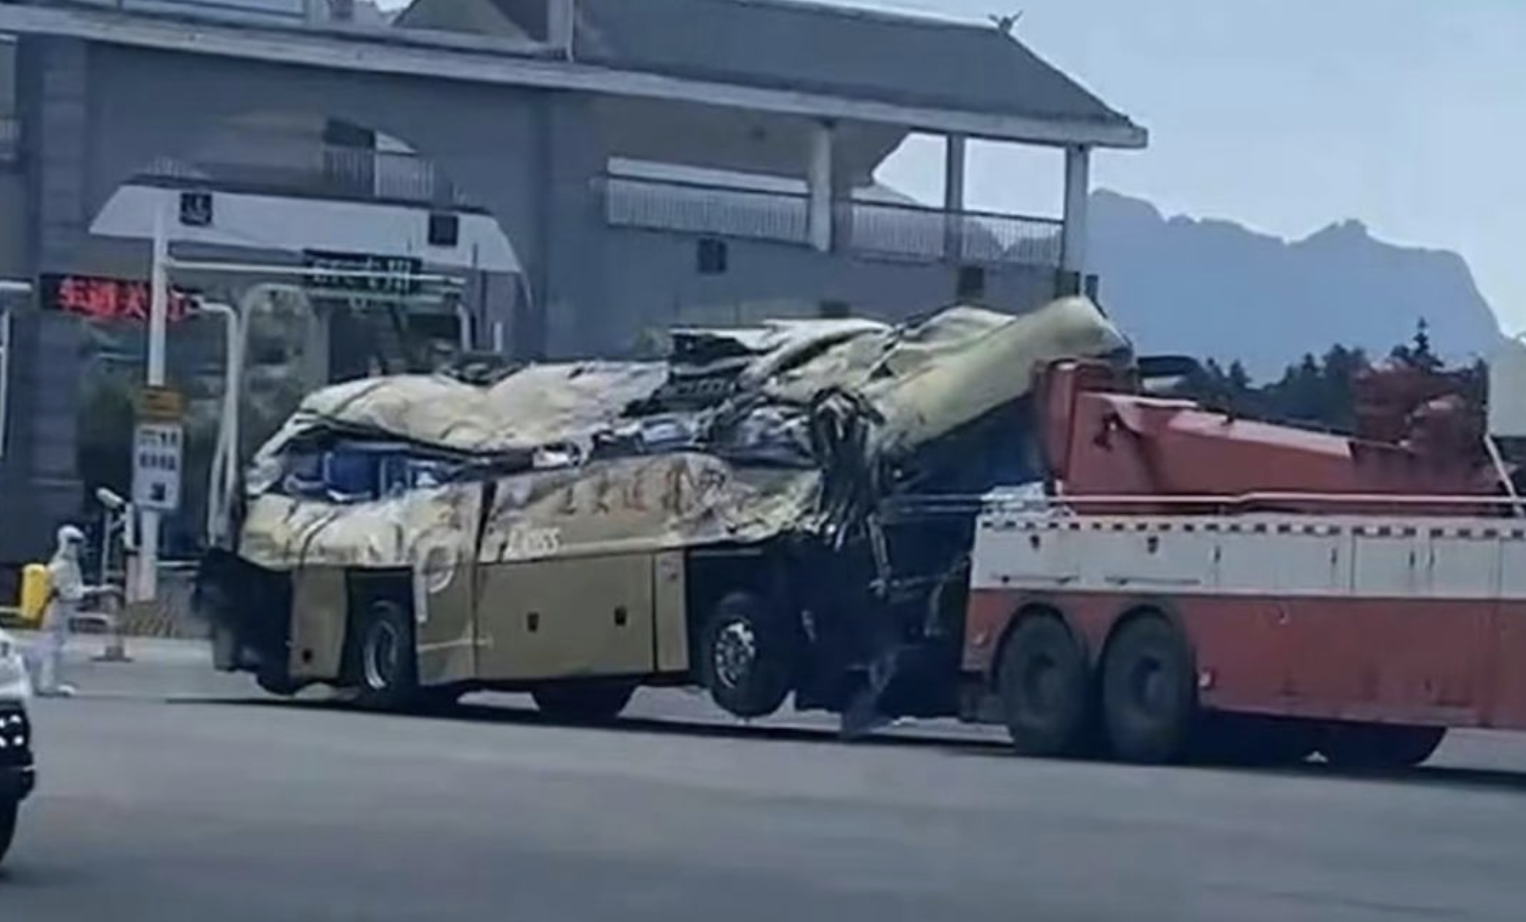 Bus destroyed in fatal China crash